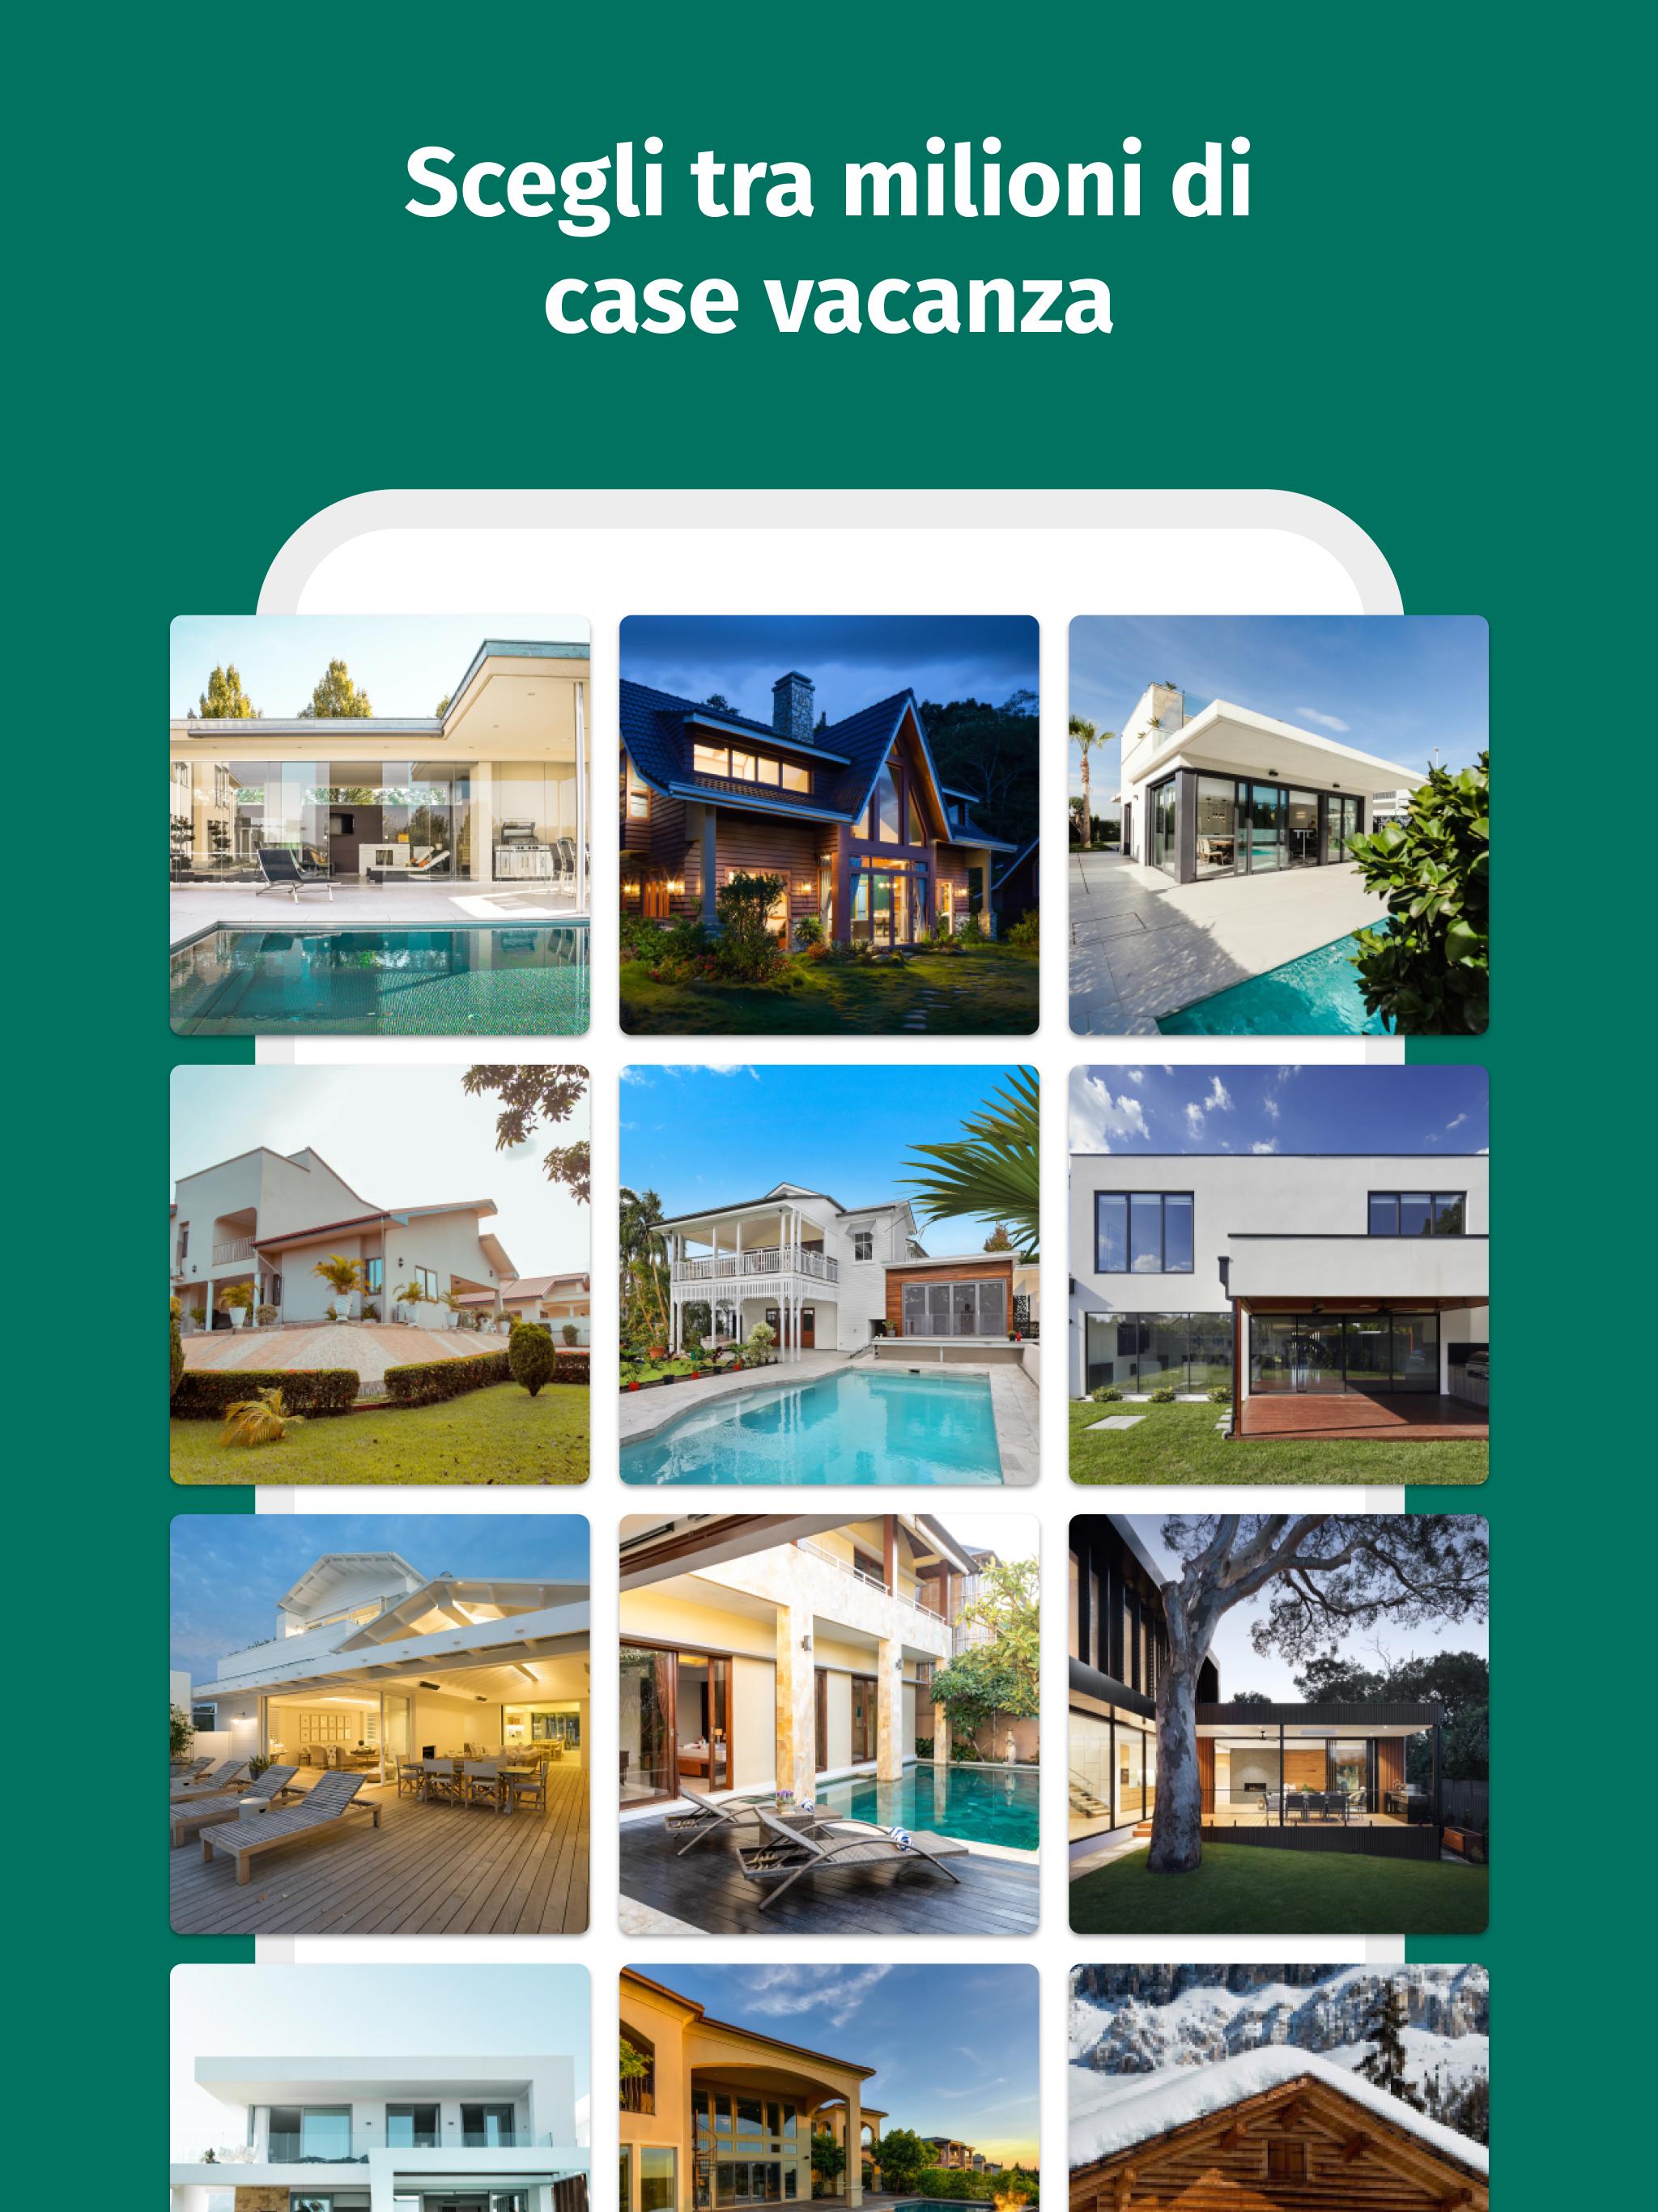 CaseVacanza.it Cerca case vacanza in affitto 1.2.0 Screenshot 14